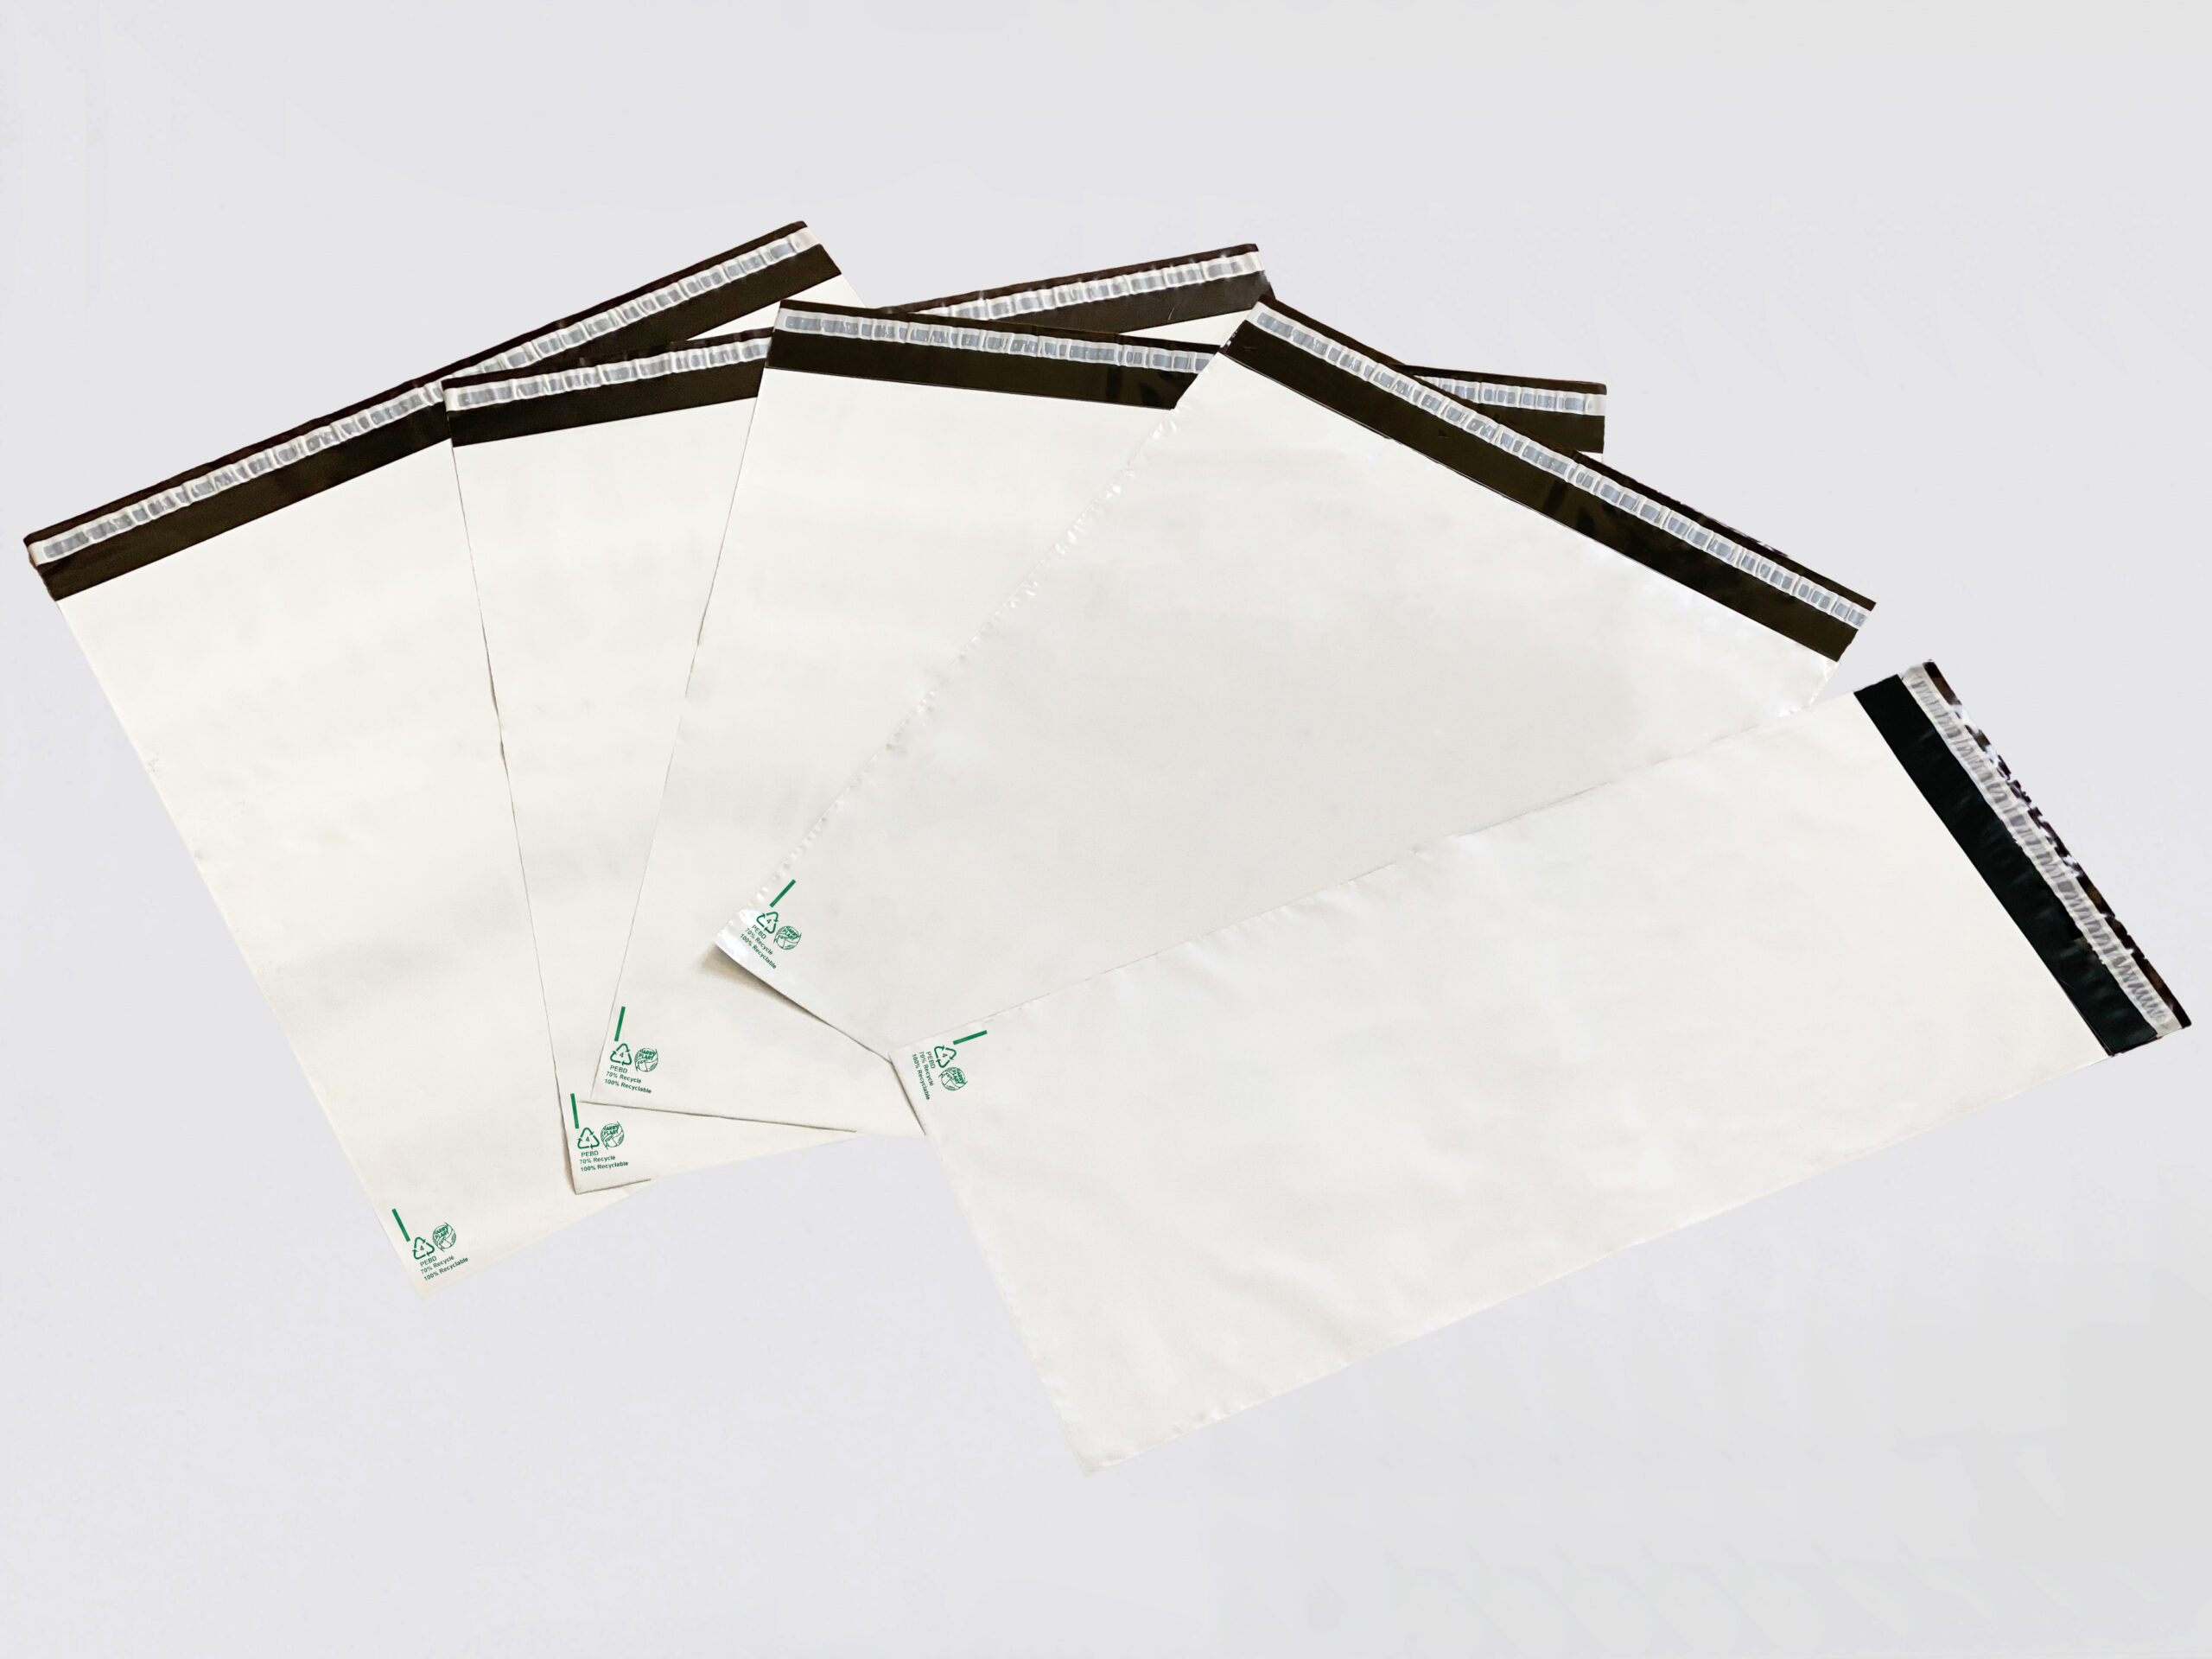 100 Enveloppes plastique opaques VAD/VPC 300x700mm - Harry plast